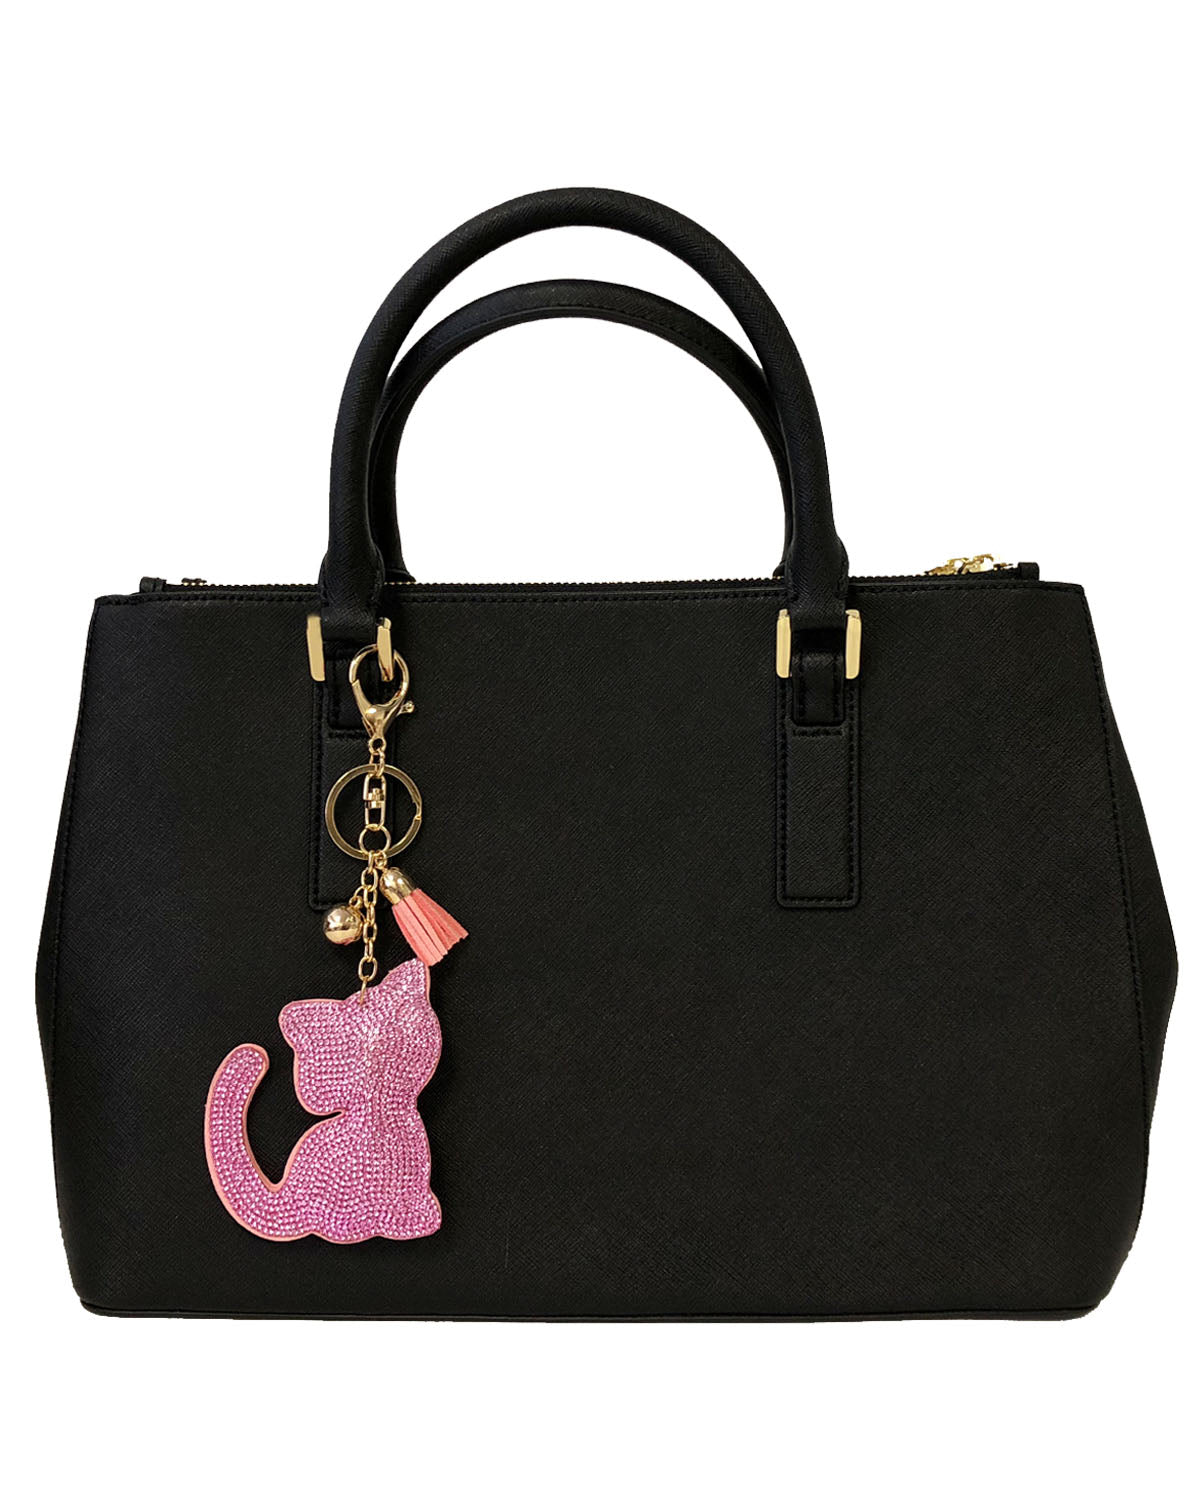 Hosby 3 Pcs Smile Expression Keychains for Women Bag Charms Key Chains Car Key Pendant for Purse Handbag Bag Decoration